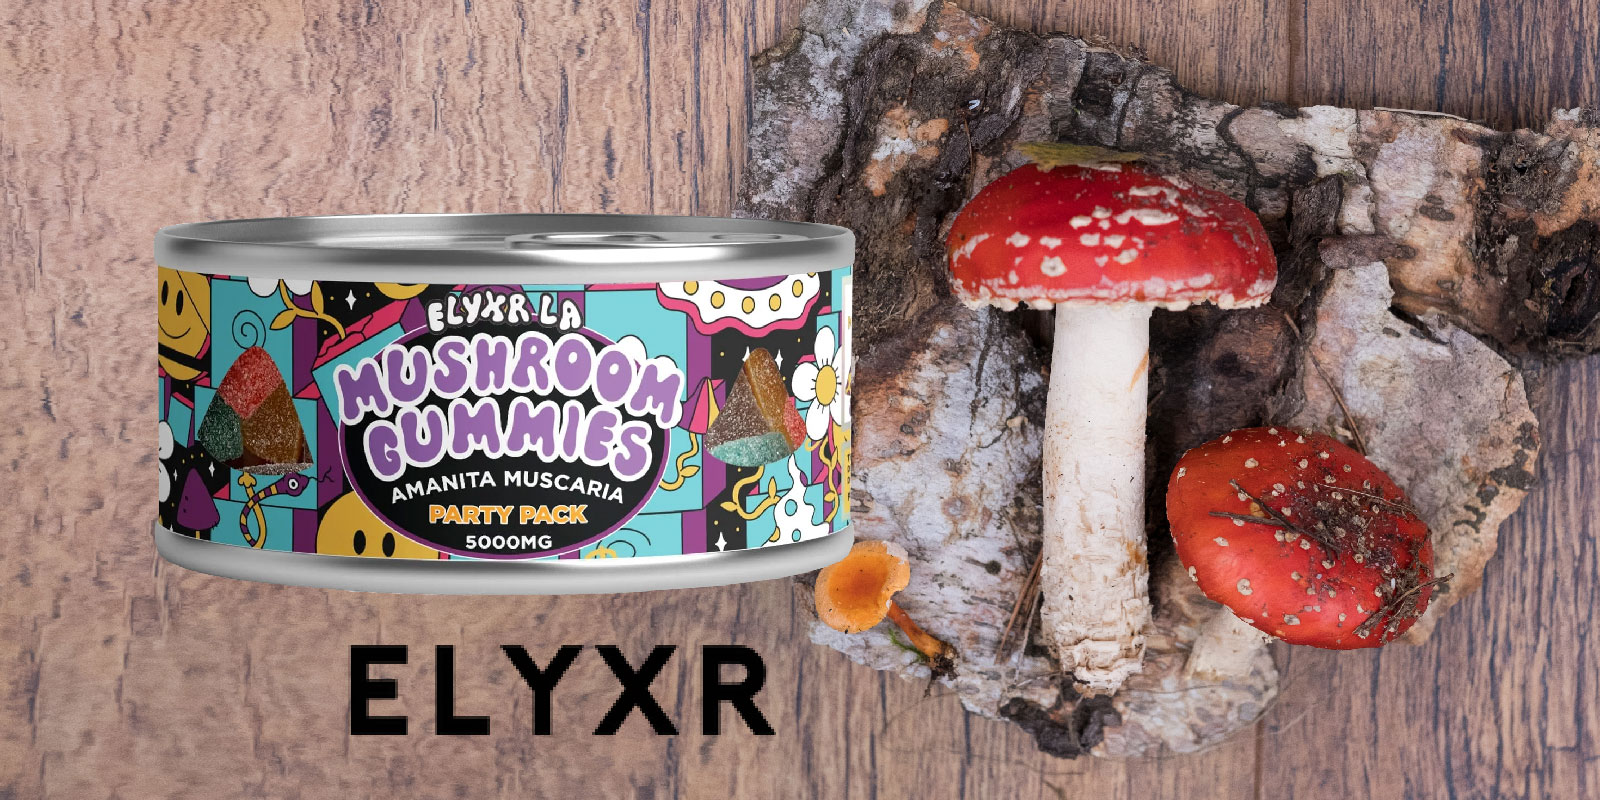 elyxr mushroom gummies next to amanita mushrooms